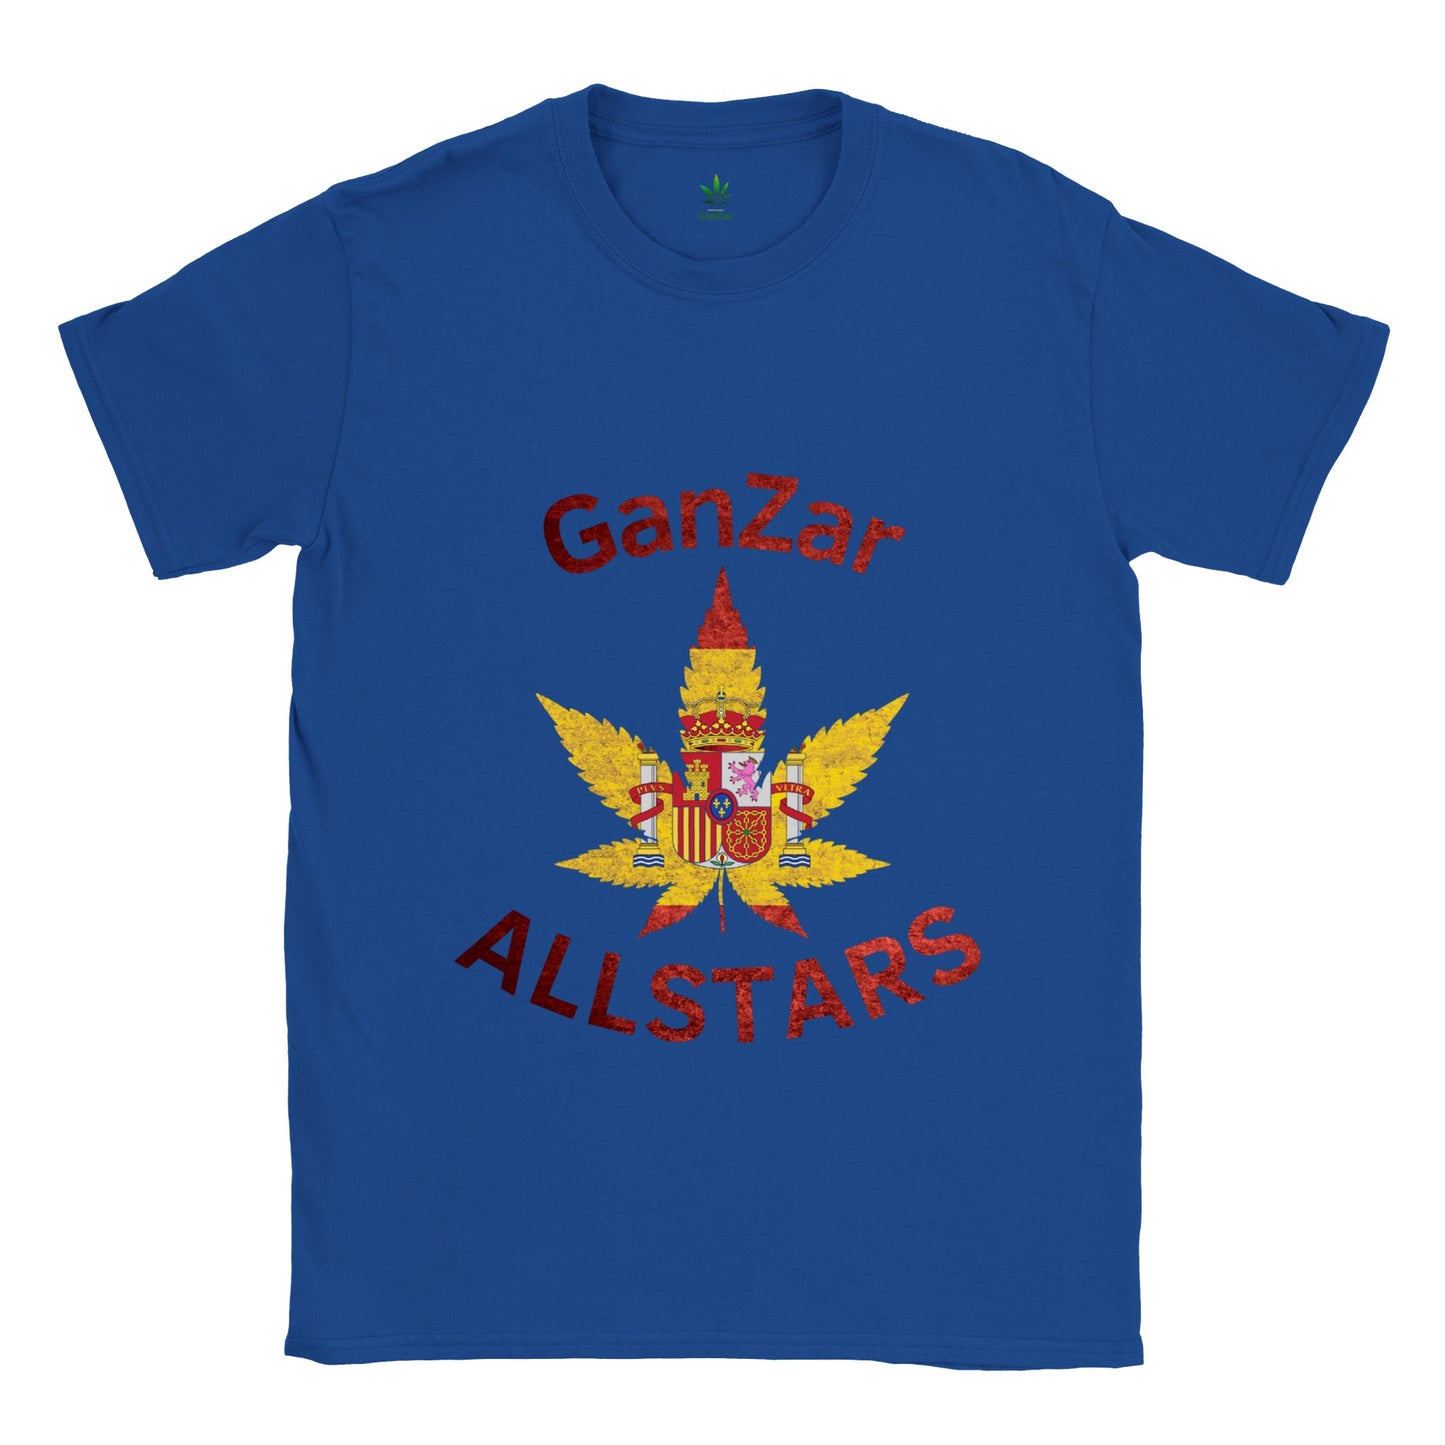 Spanien GanZar Allstars Unisex T-Shirt